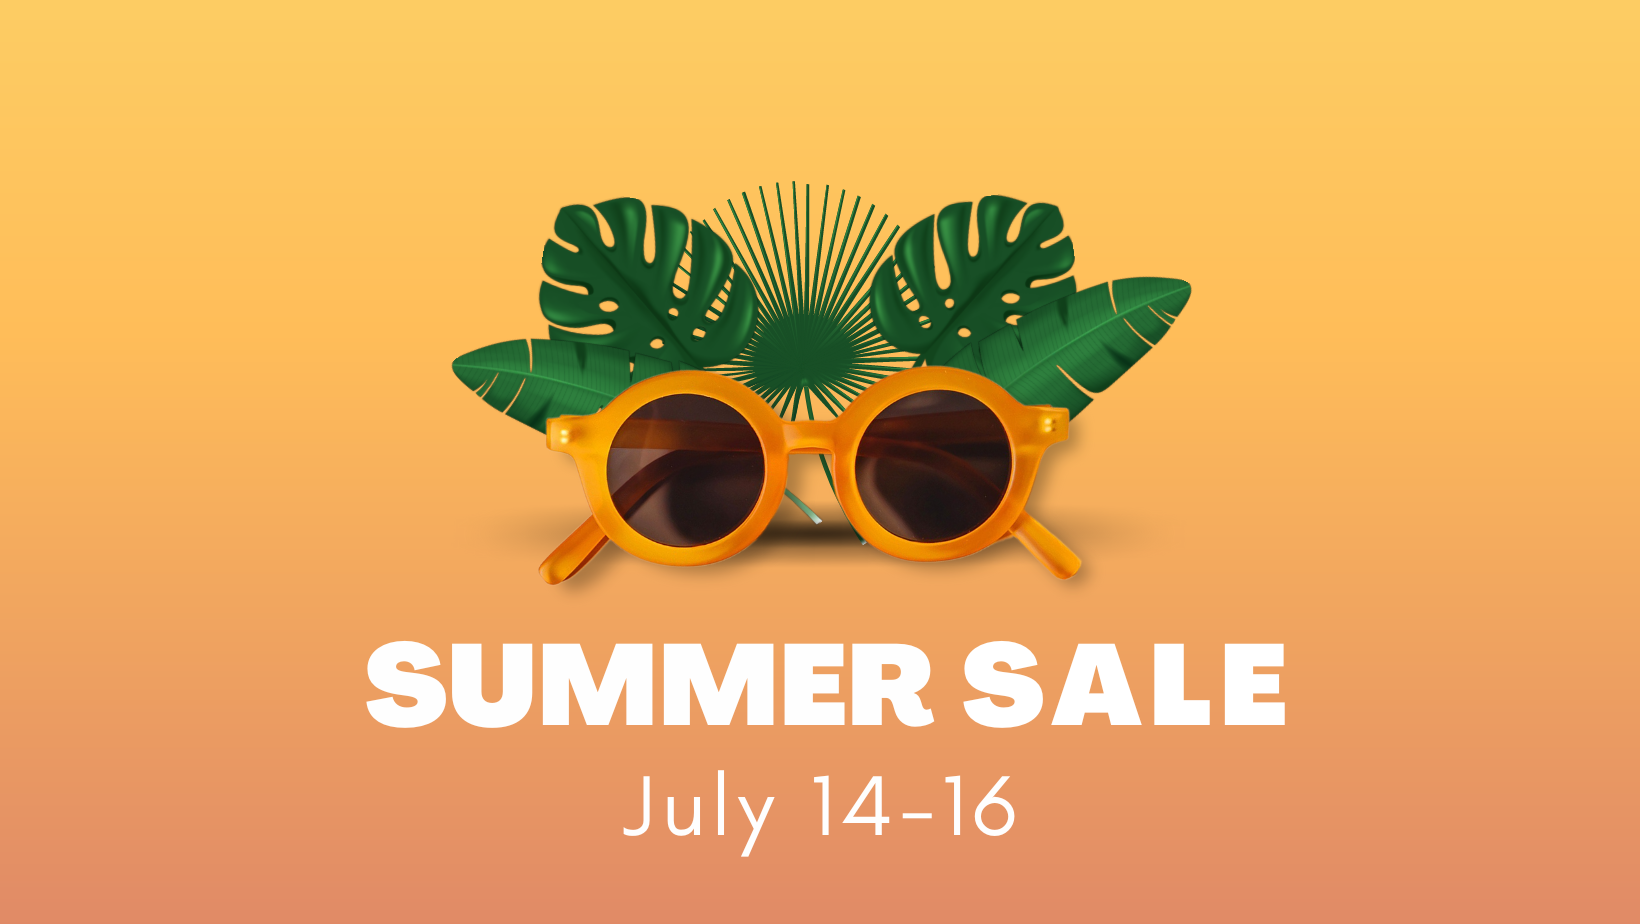 Summer Sale July 14-16